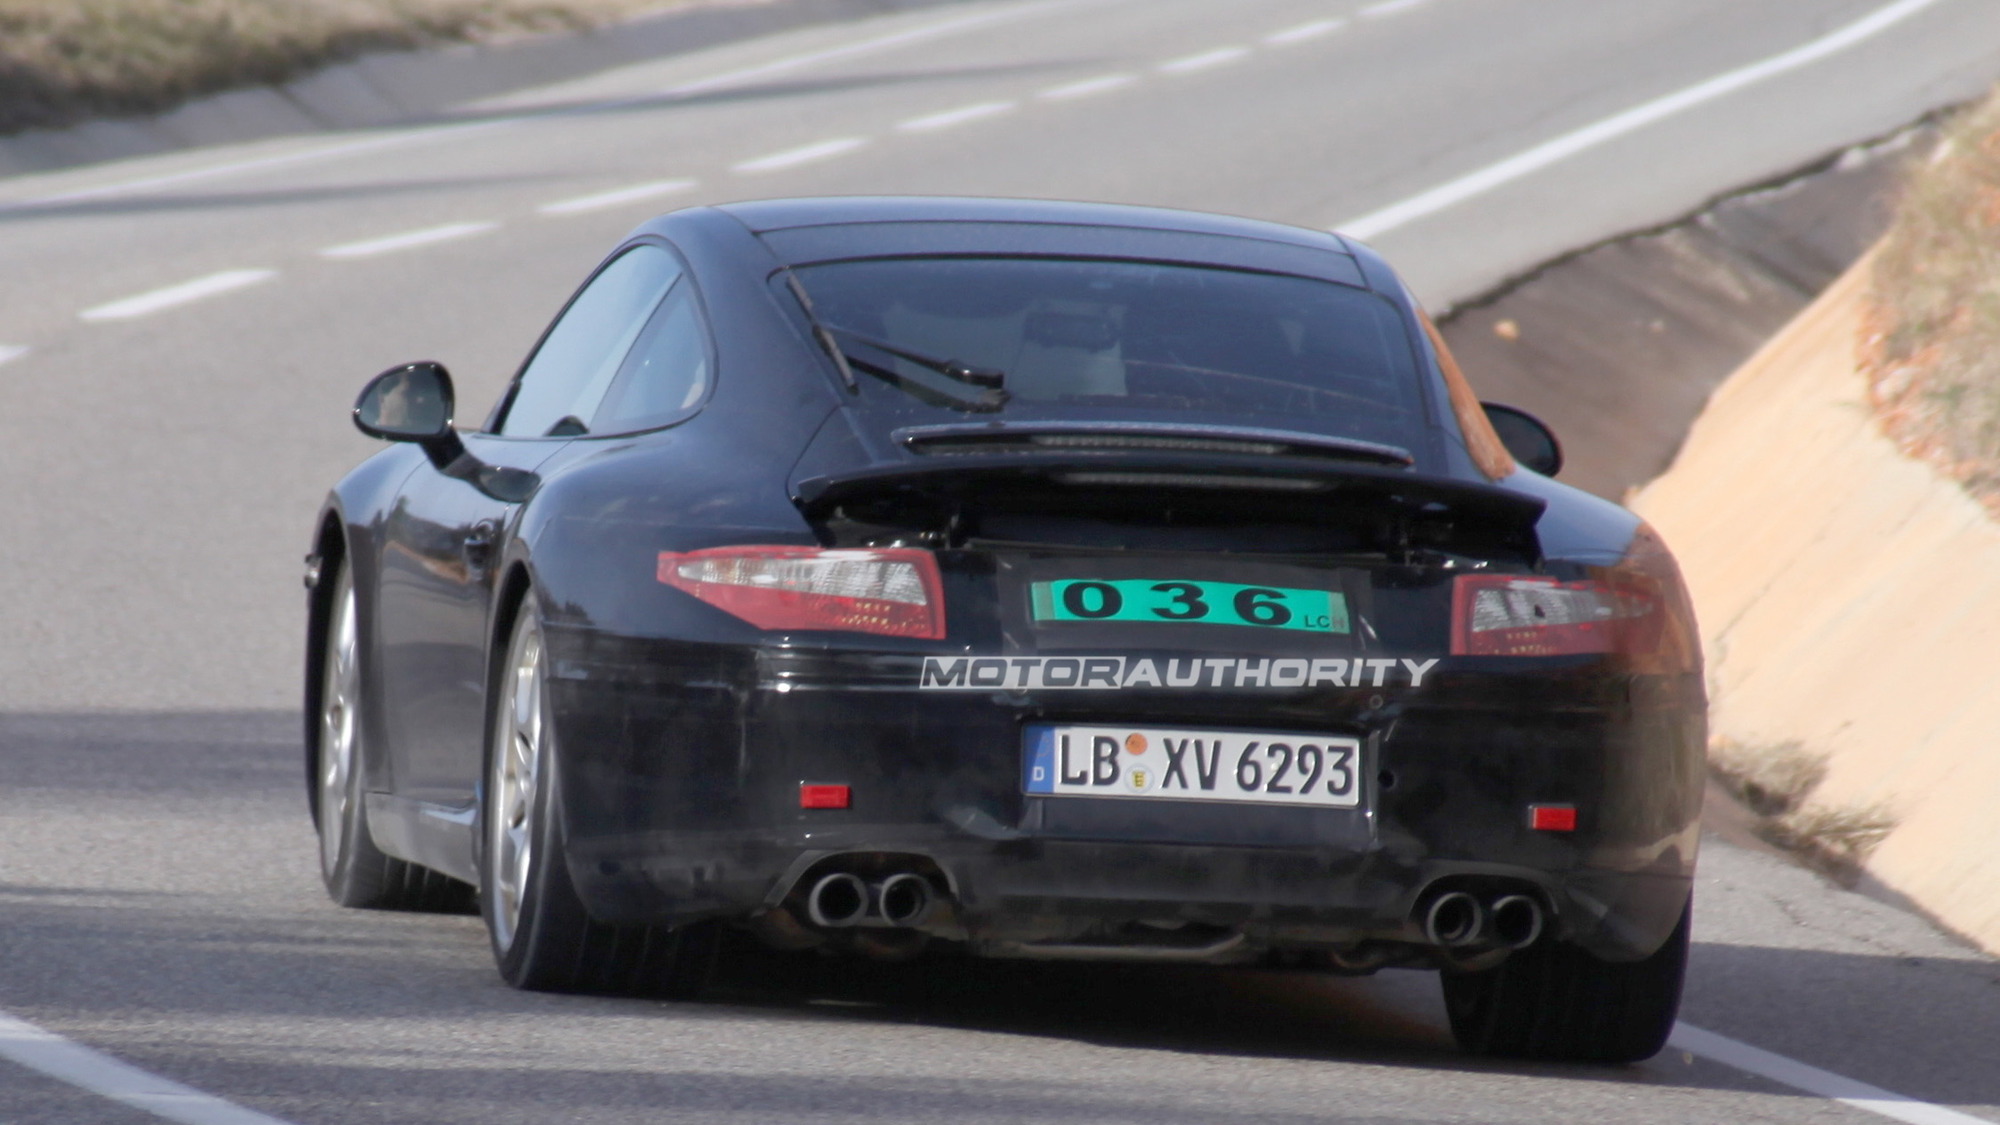 2012 Porsche 911 spy shots